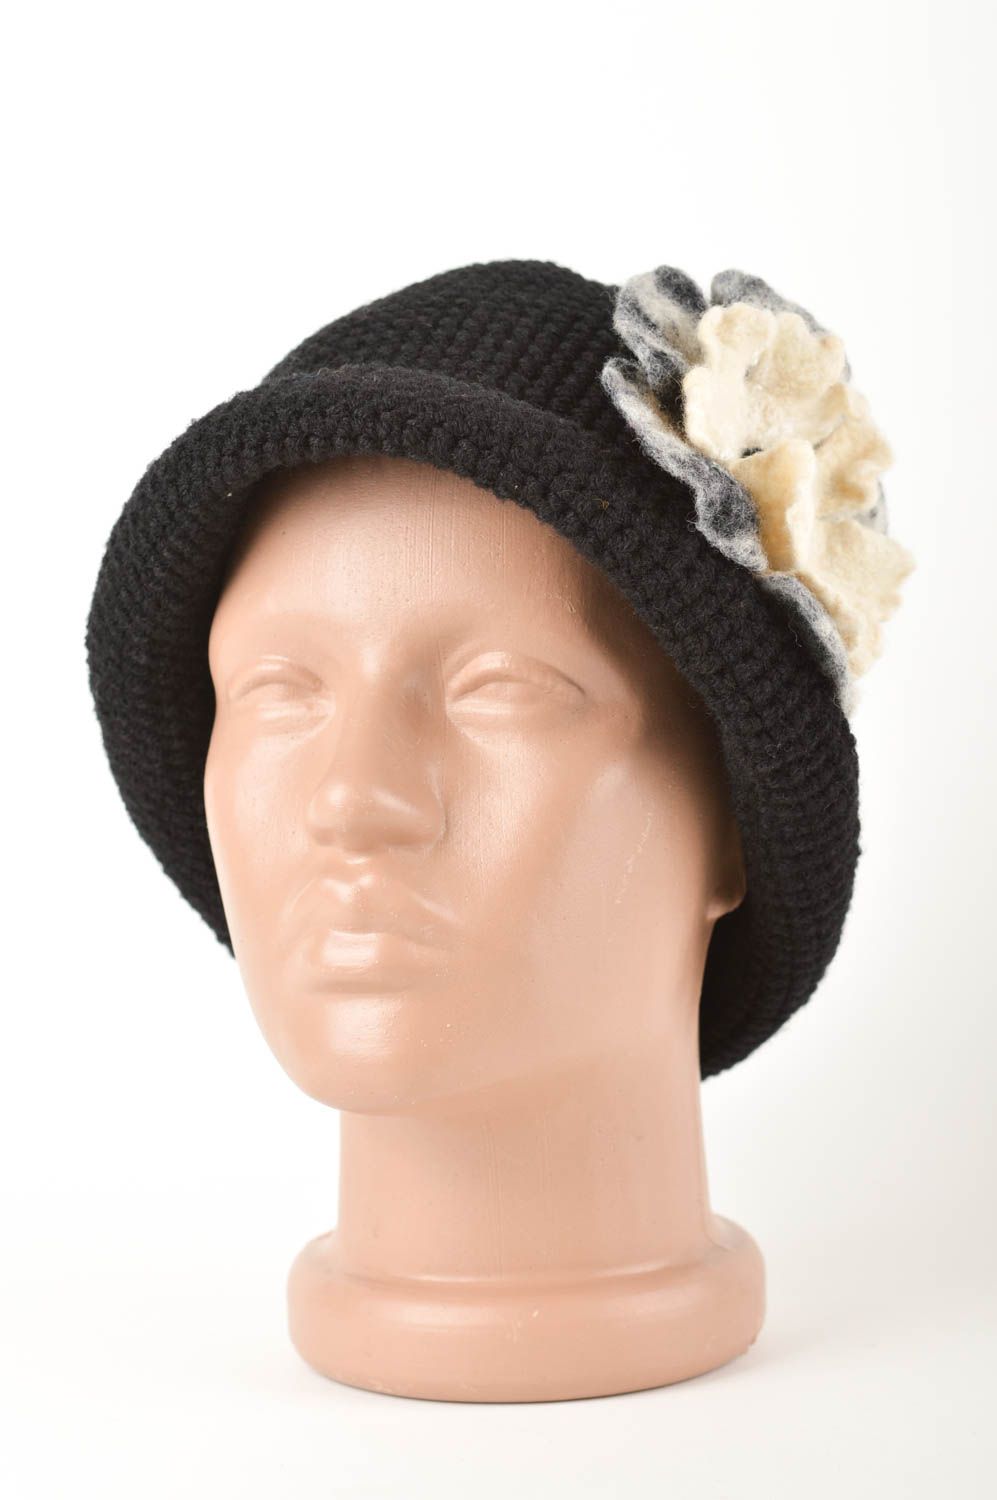 Handmade cap with flower warm winter cap elegant cap for women black hat photo 1